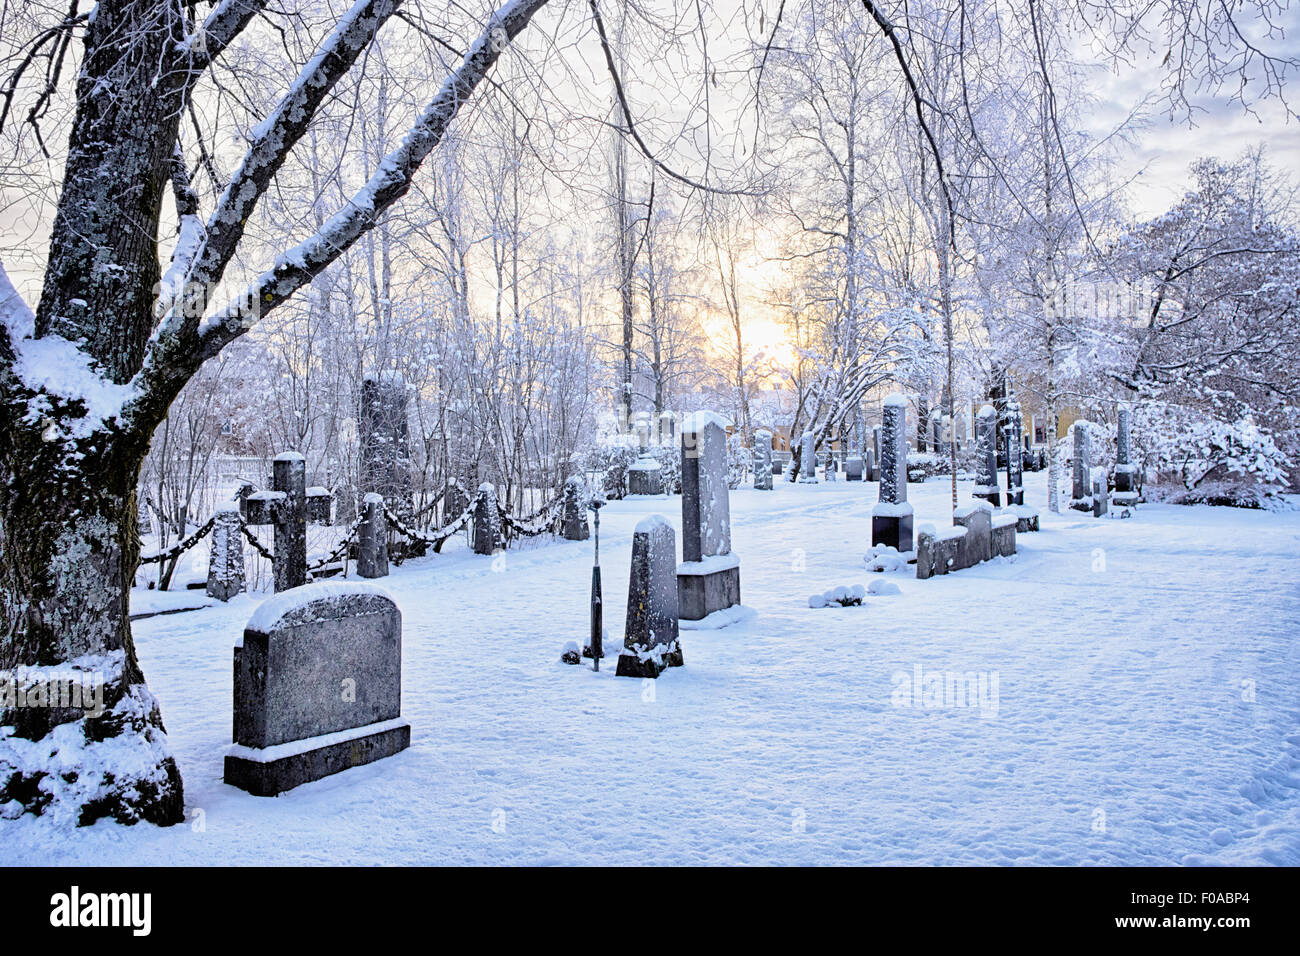 View of grave stones in snow covered cemetery at dusk, Hemavan, Sweden Stock Photo